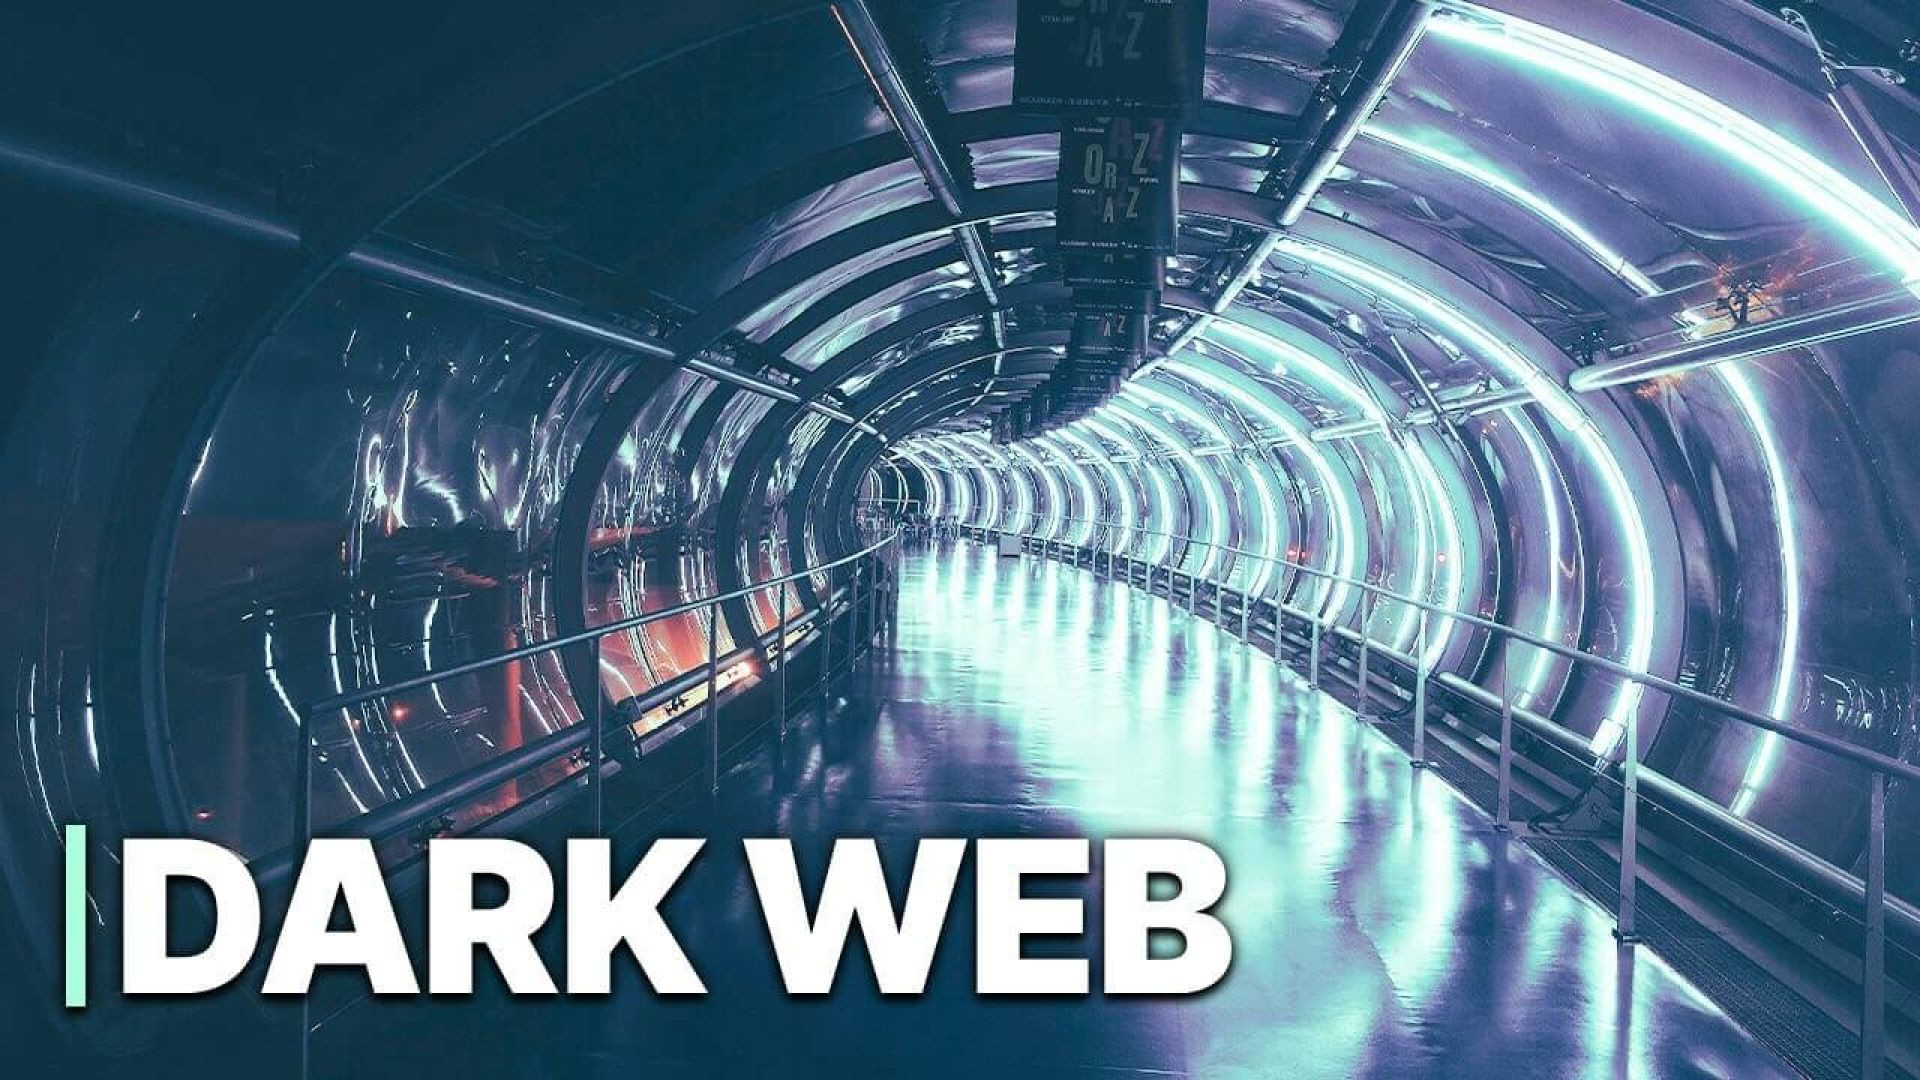 The Dark Web - (2019) Documentary